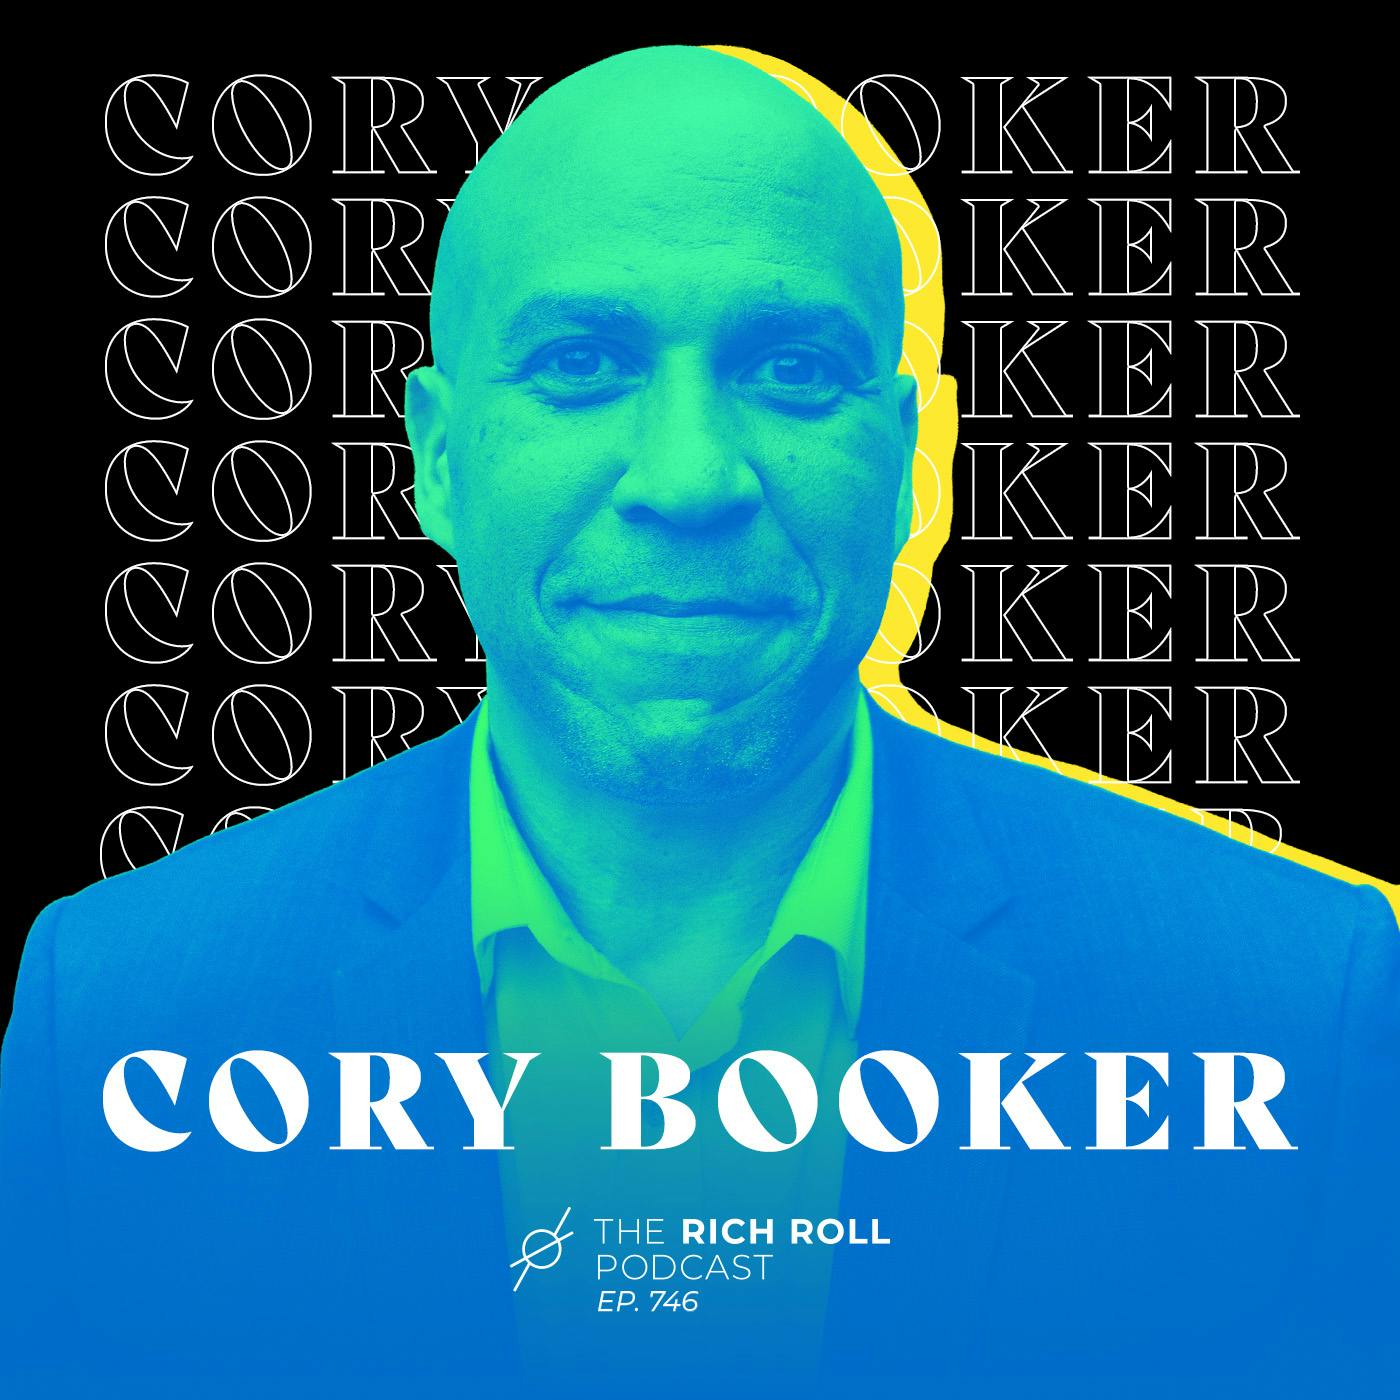 Senator Cory Booker On Unity, Hope & Healthy Food For All